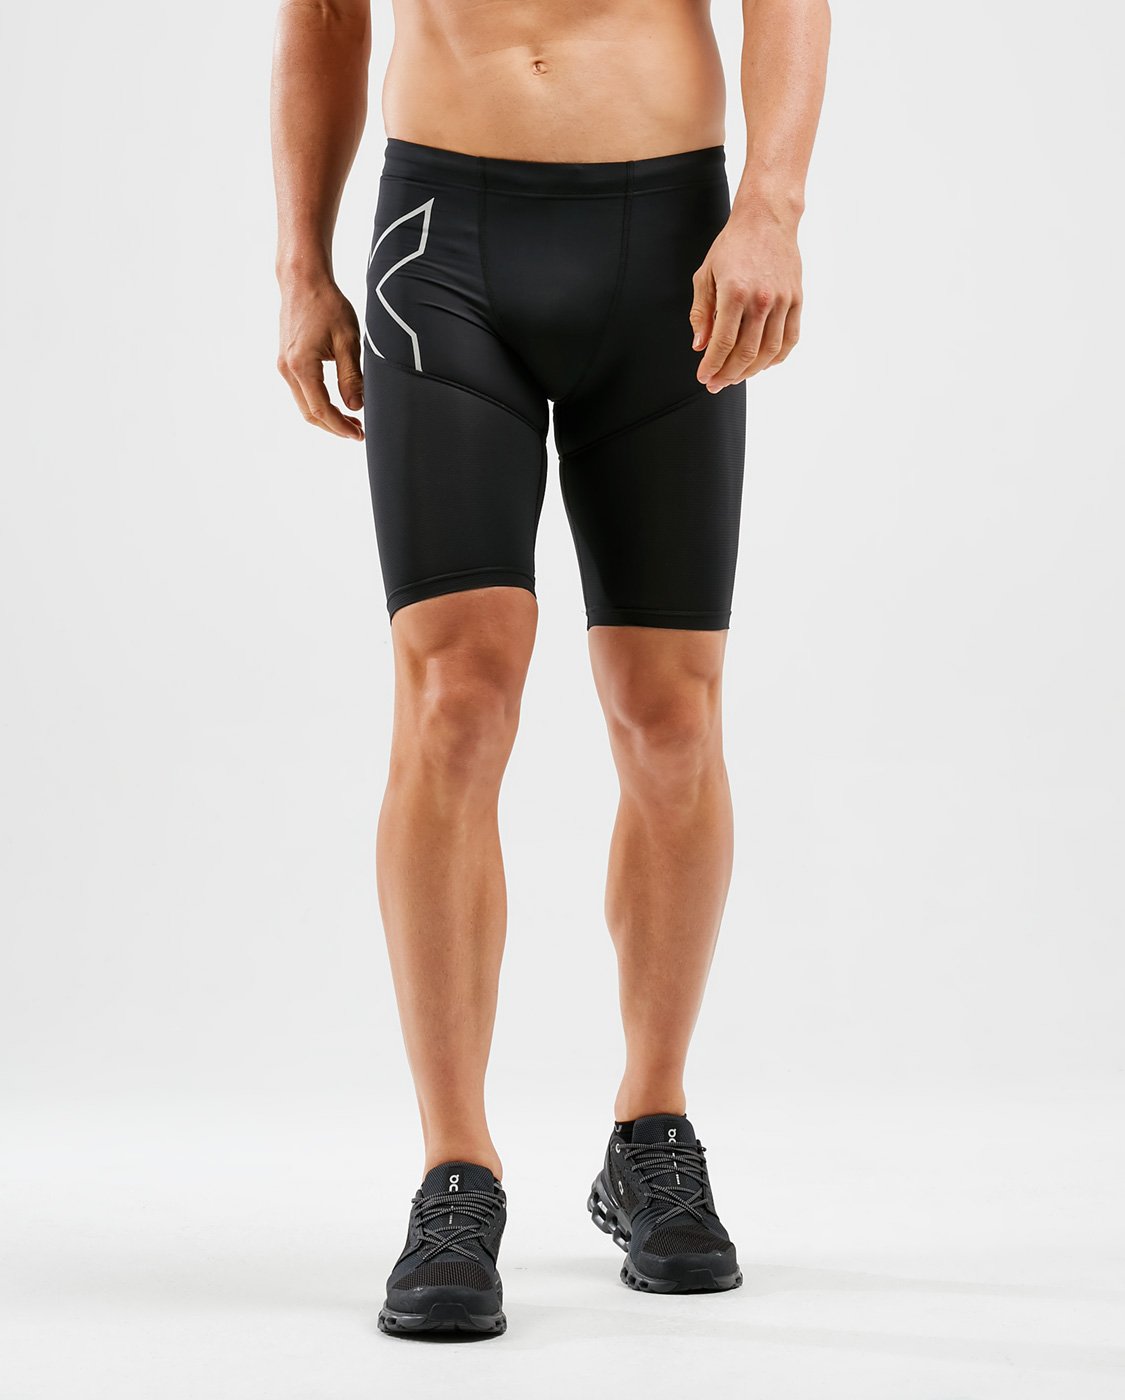 Buy CompressionZ Men's Compression Shorts - Compression Underwear